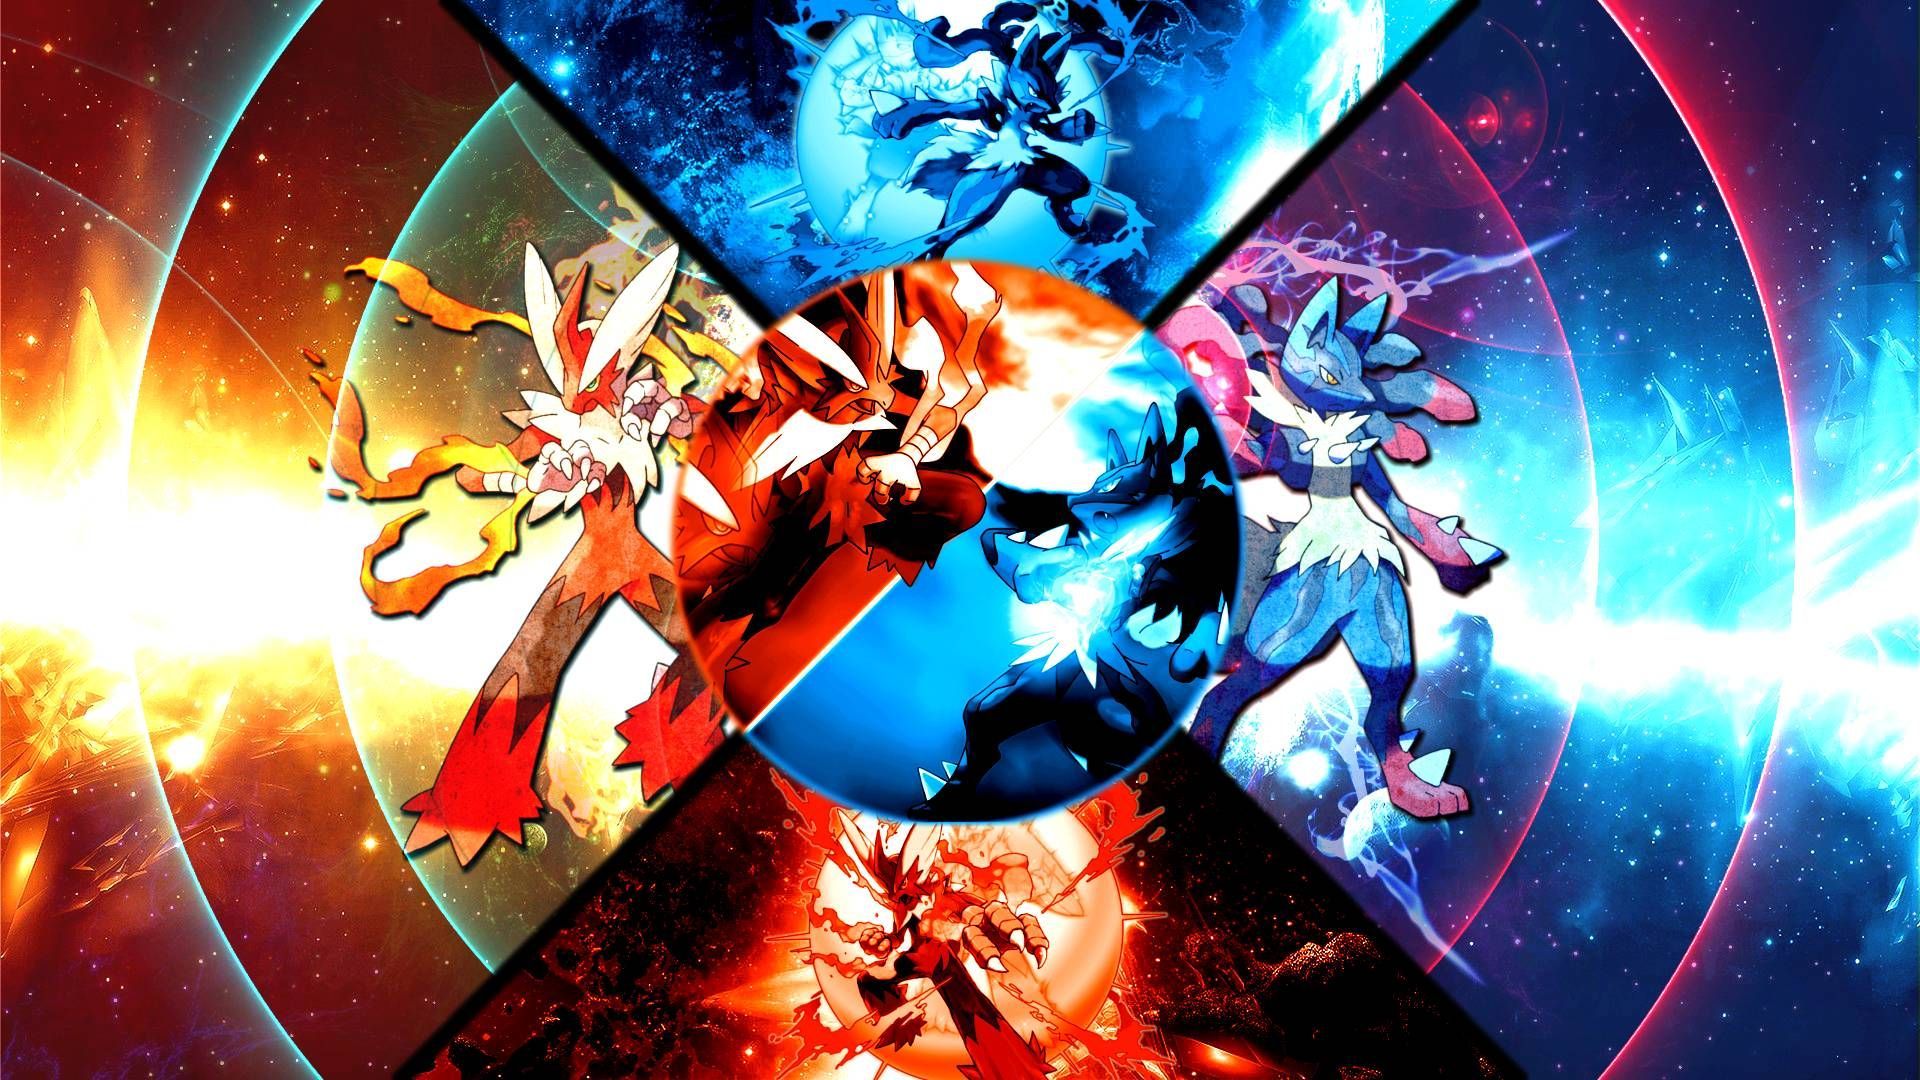 Fighting Prowess. HD pokemon wallpaper, Anime wallpaper, Cute pokemon wallpaper